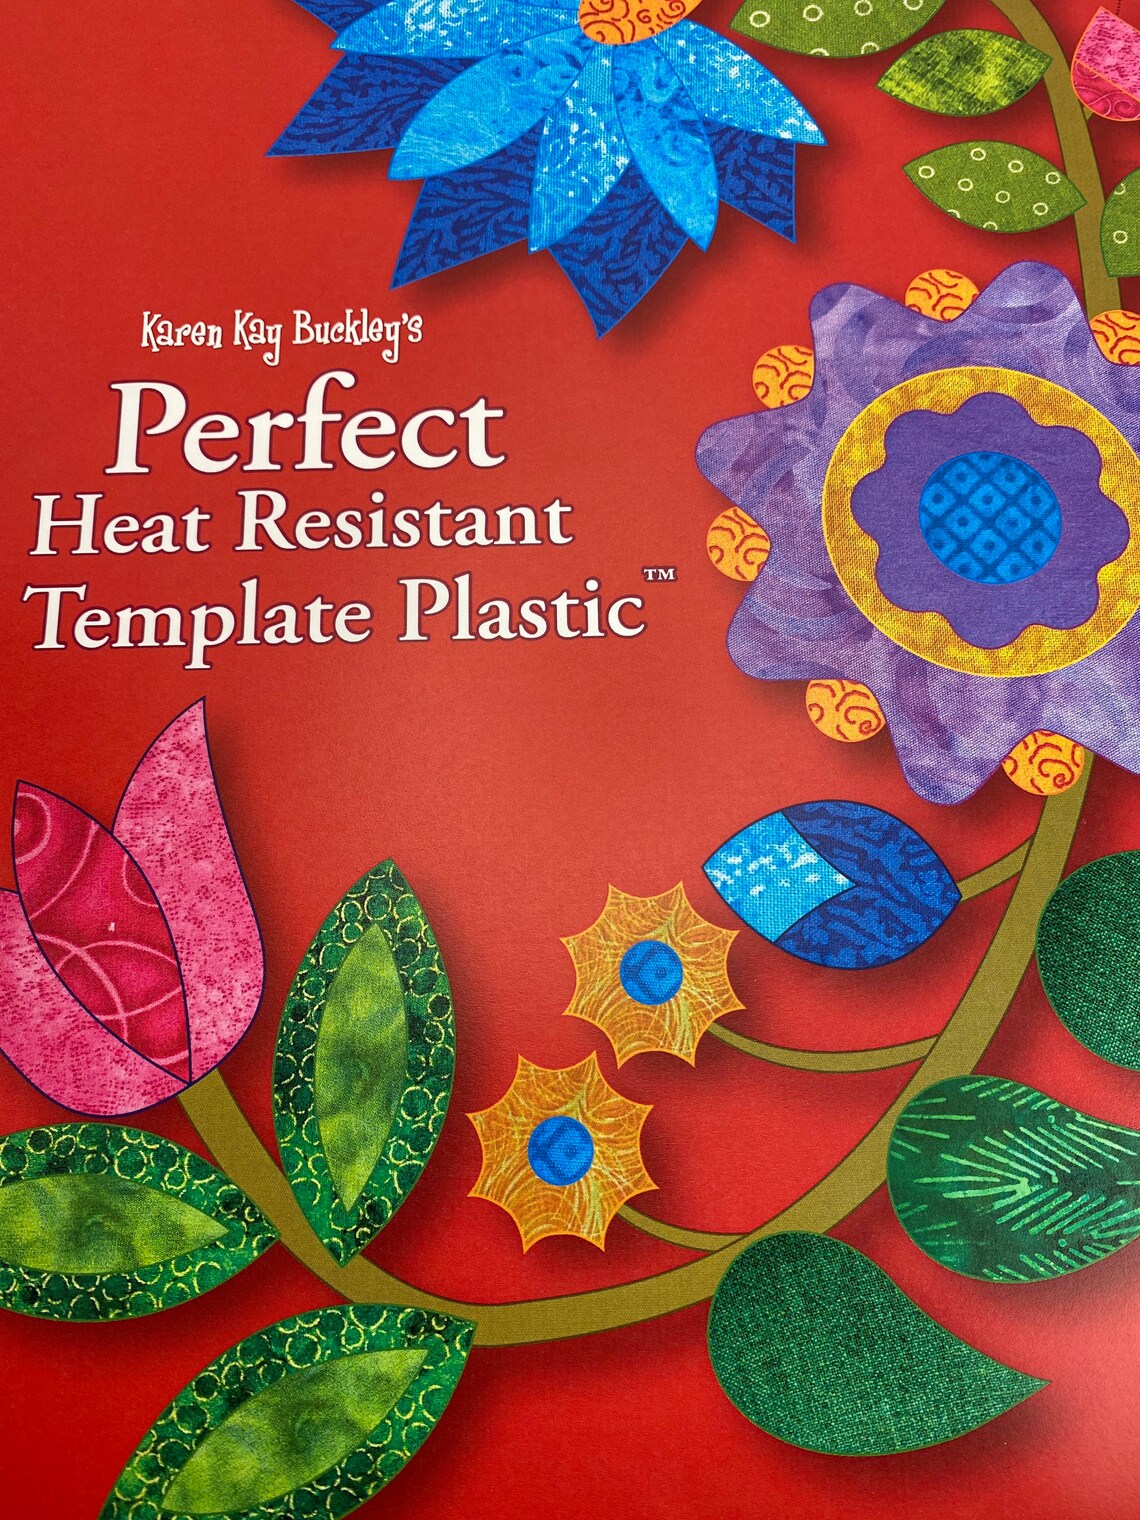 Perfect Heat Resistant Template Plastic by Karen Kay Buckley